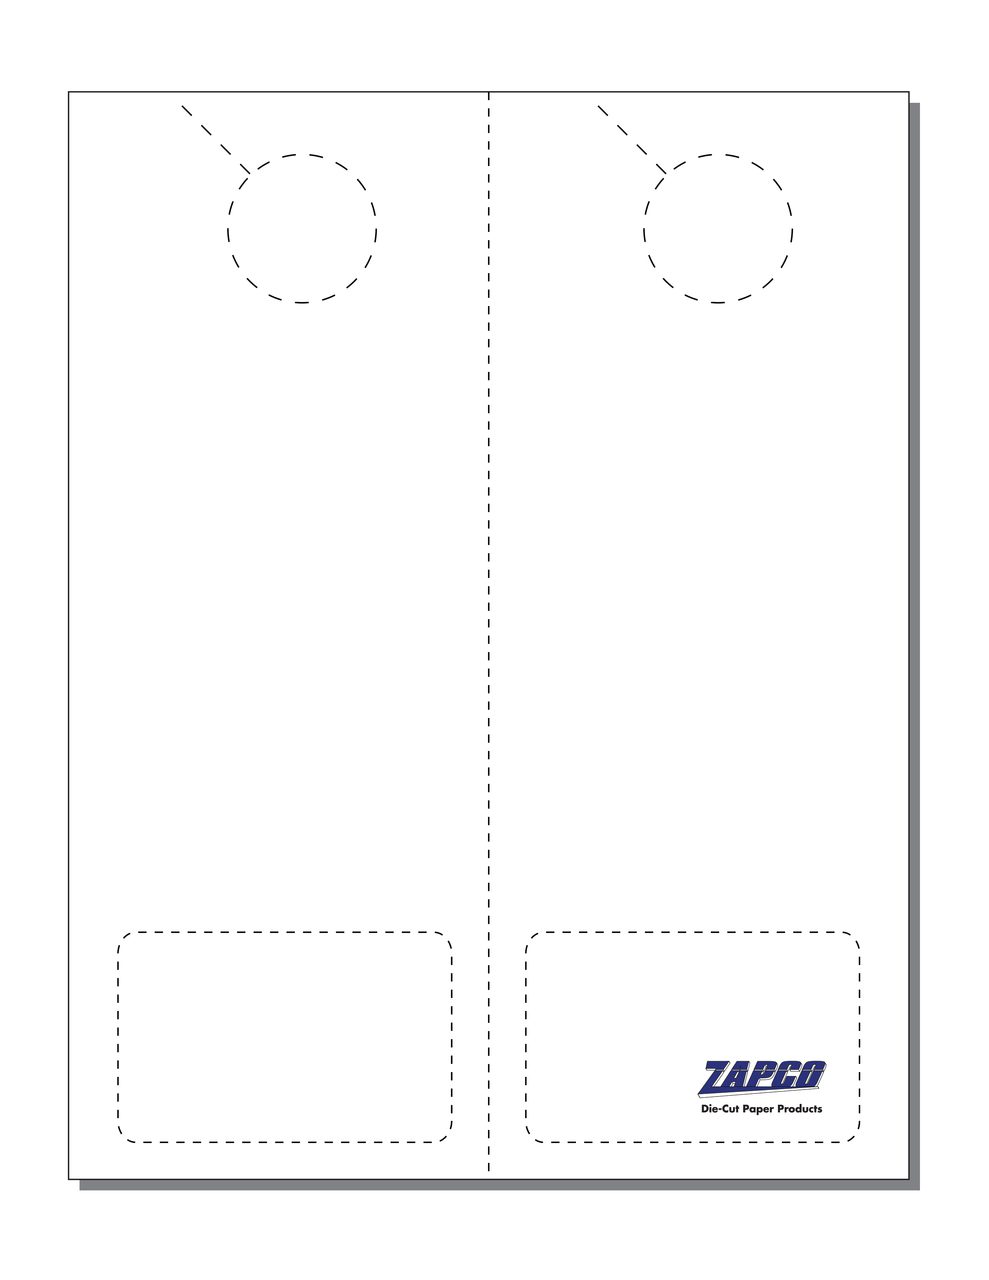 Item 232: 2-Up 4 1/4" x 11" Door Hanger with Club Card 8 1/2" x 11" Sheet(250 Sheets)